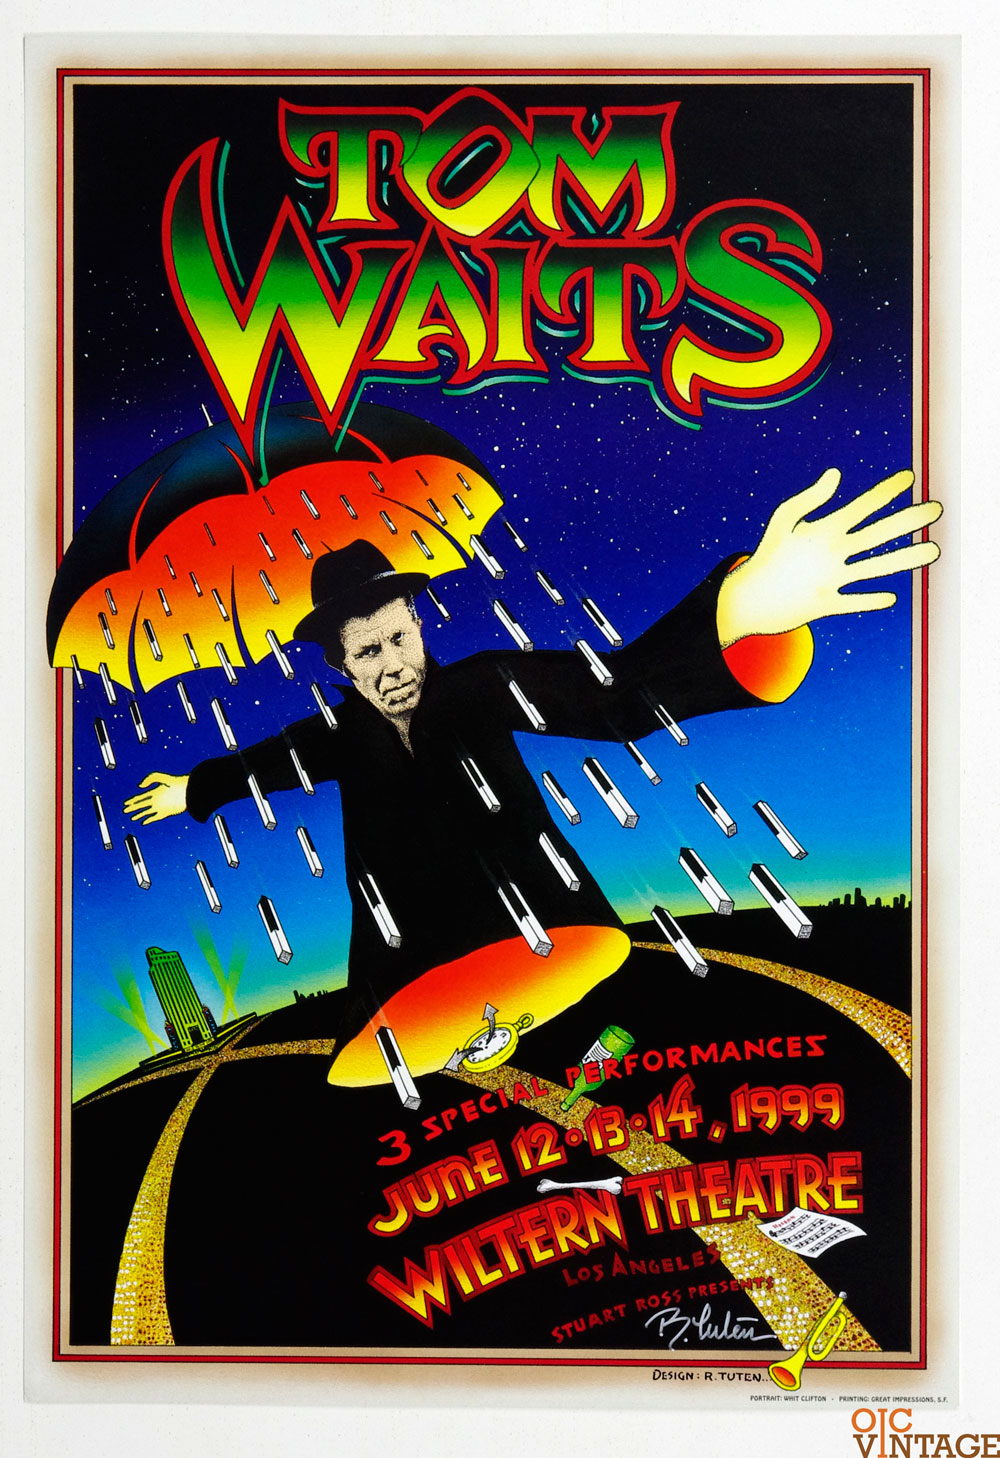 Tom Waits Poster 1999 Jun 13 Wiltern Theatre Los Angeles Randy Tuten Signed